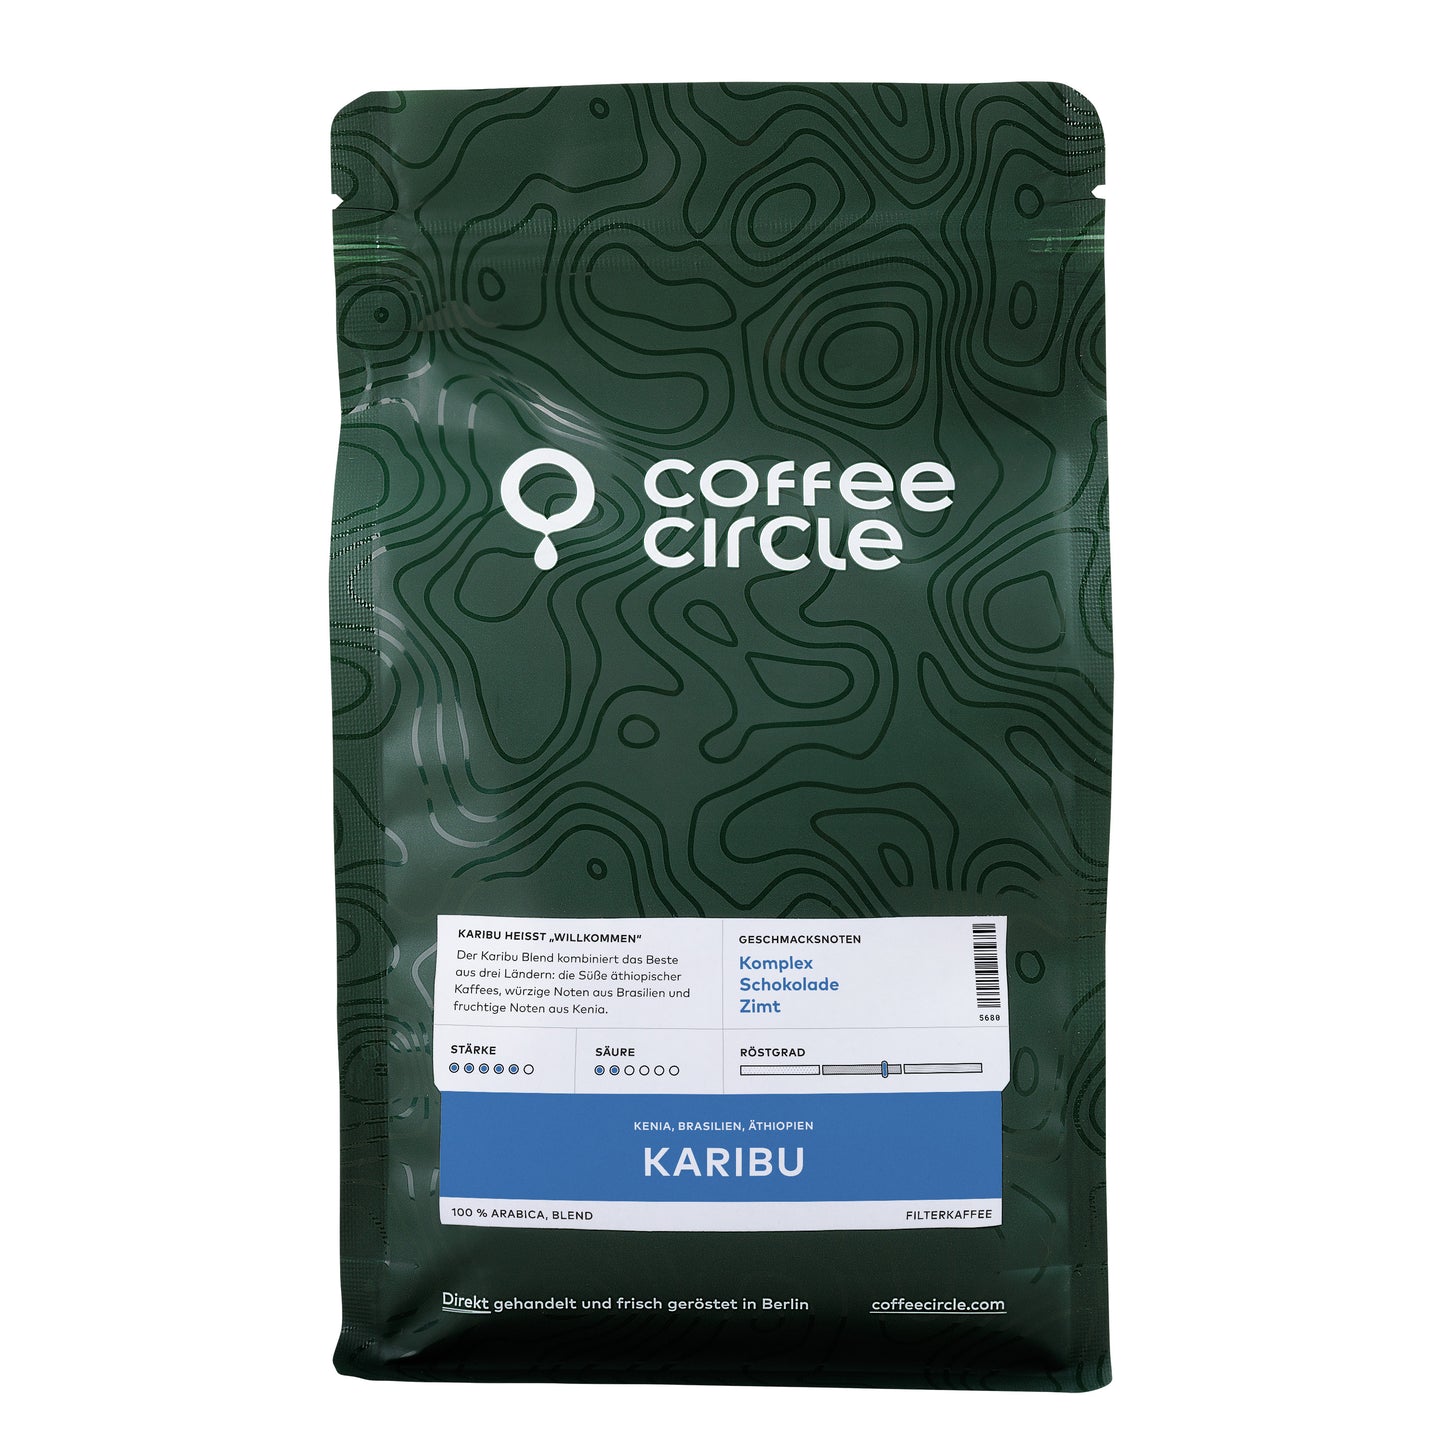 Karibu Coffee